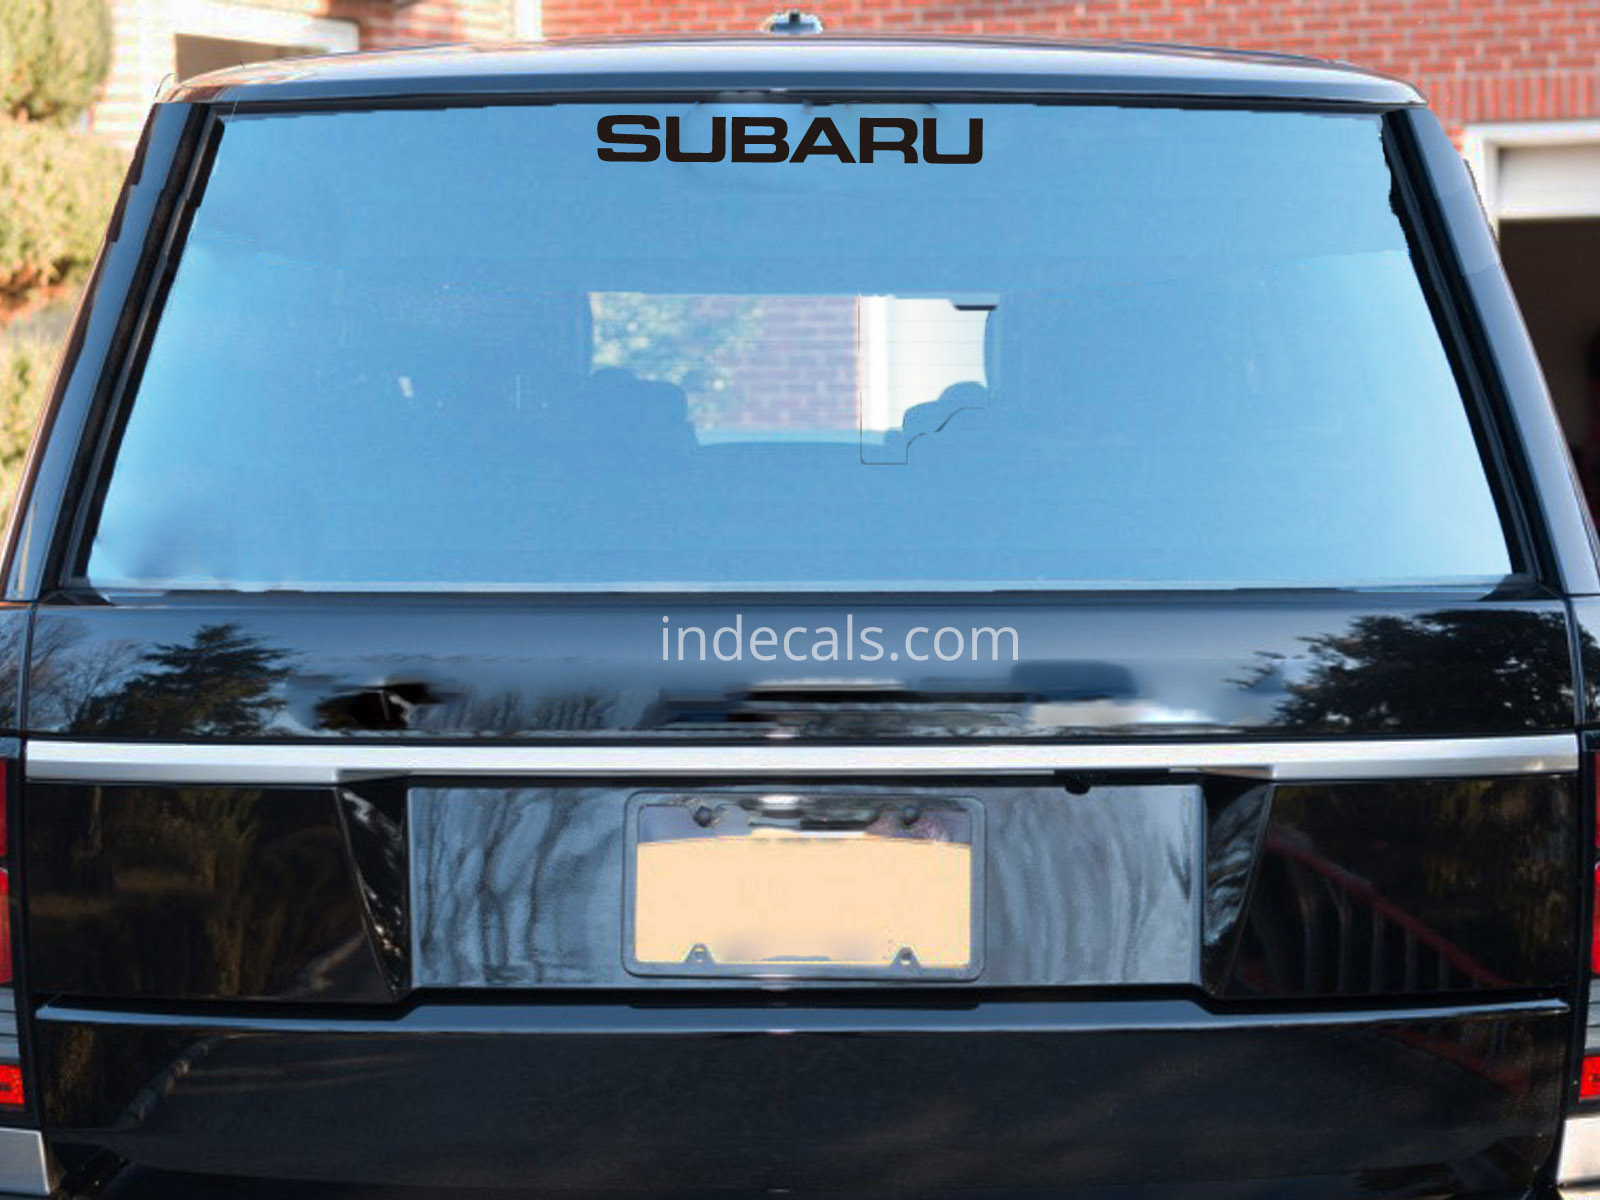 1 x Subaru Sticker for Windshield or Back Window - Black